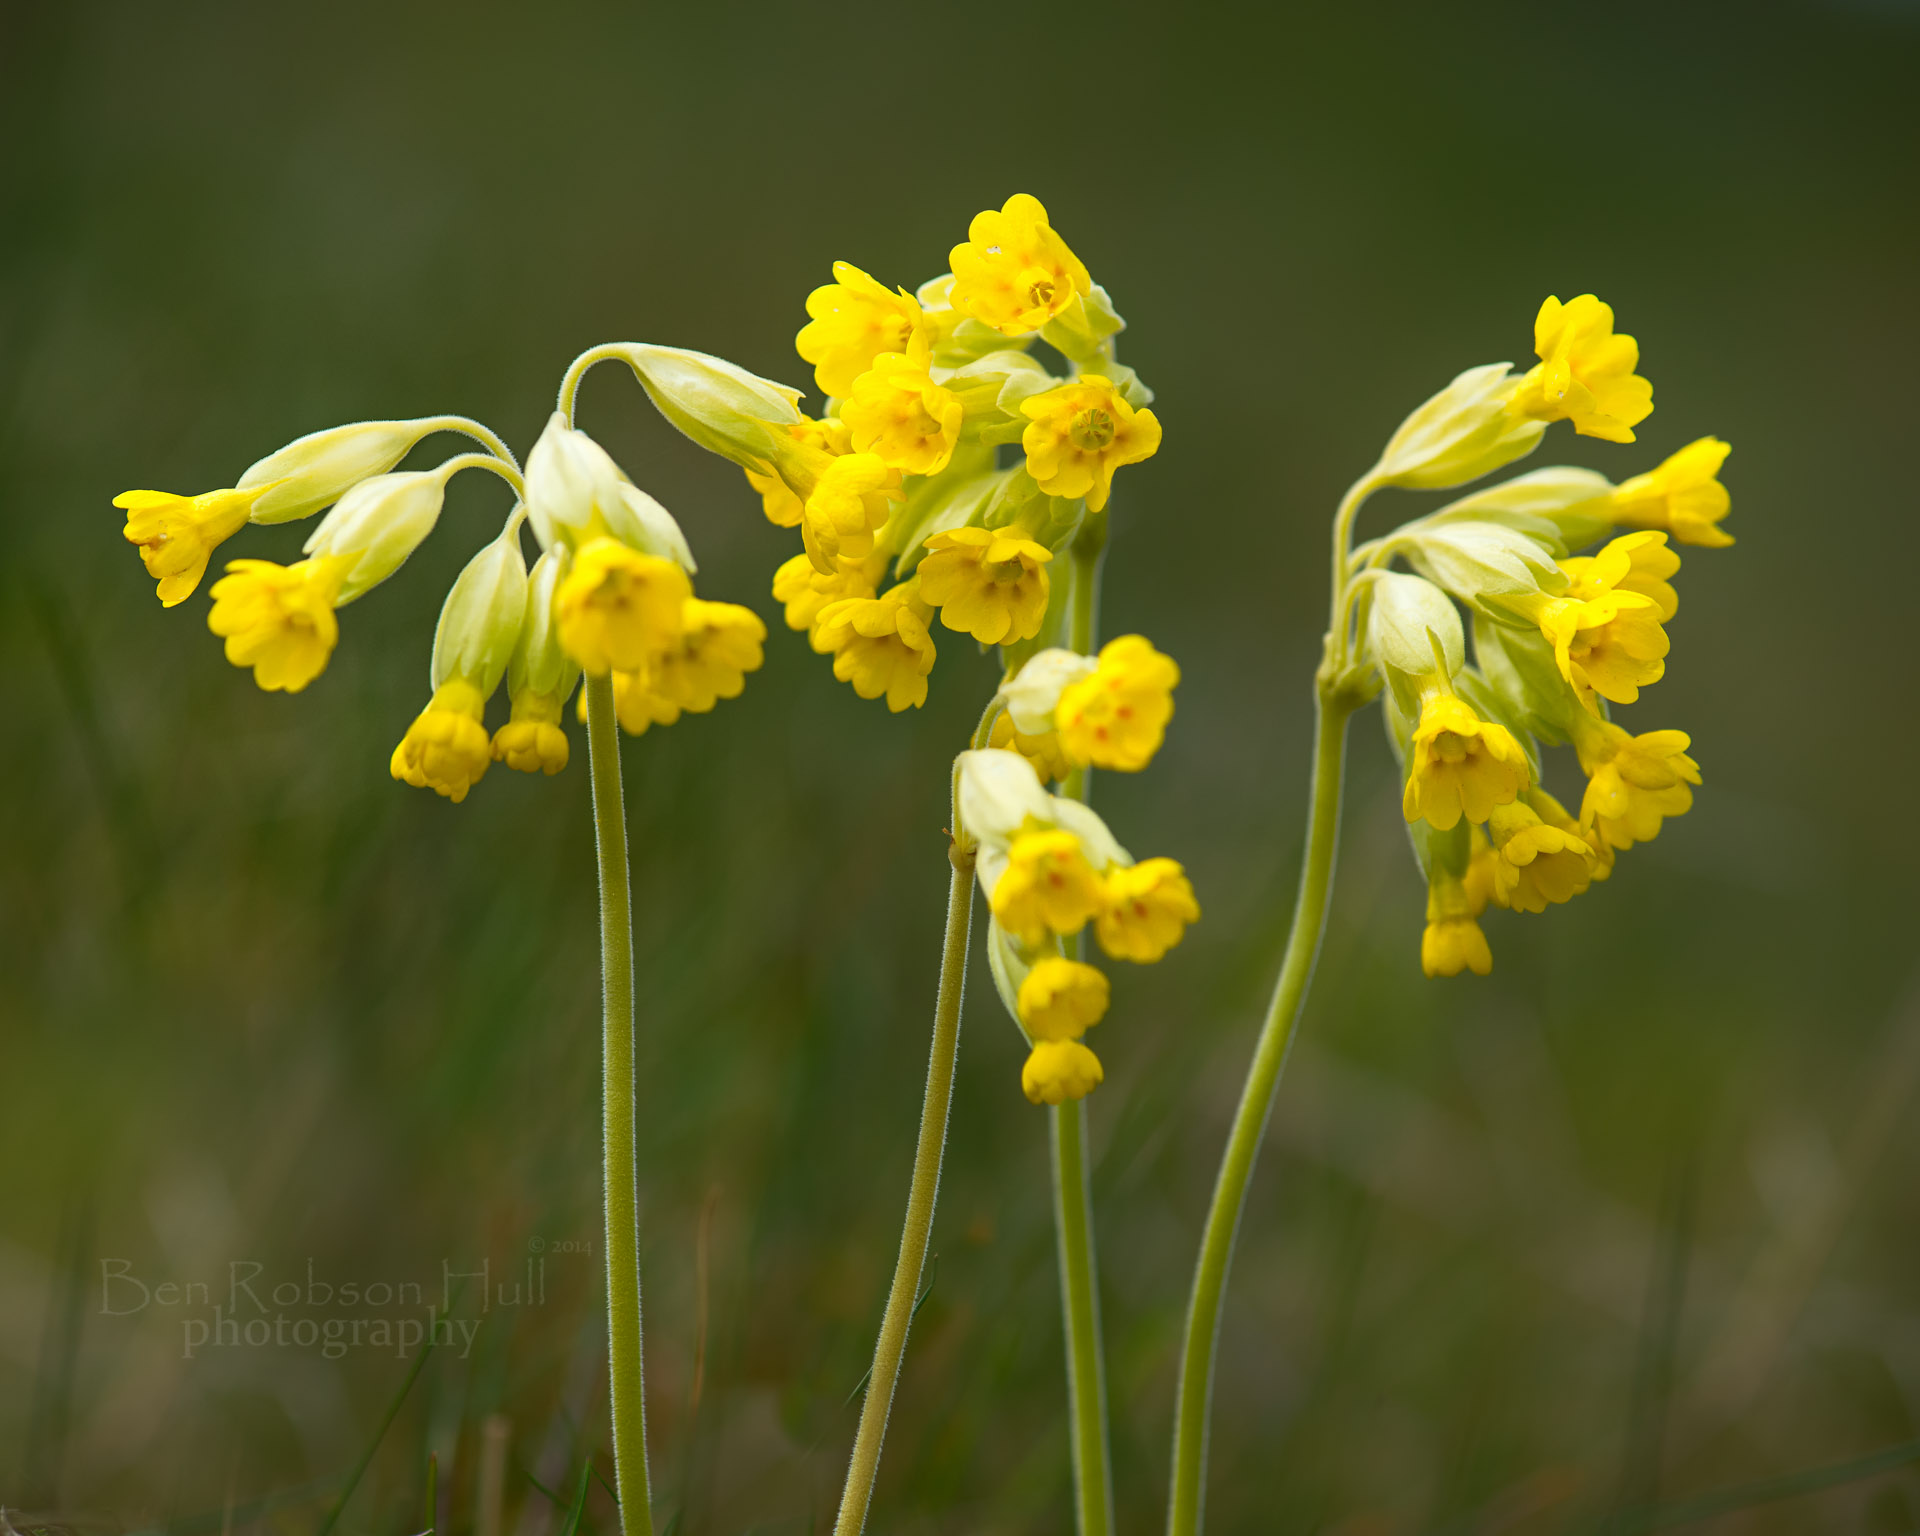 Cowslip (Primula veris) - Ben Robson Hull | Photography